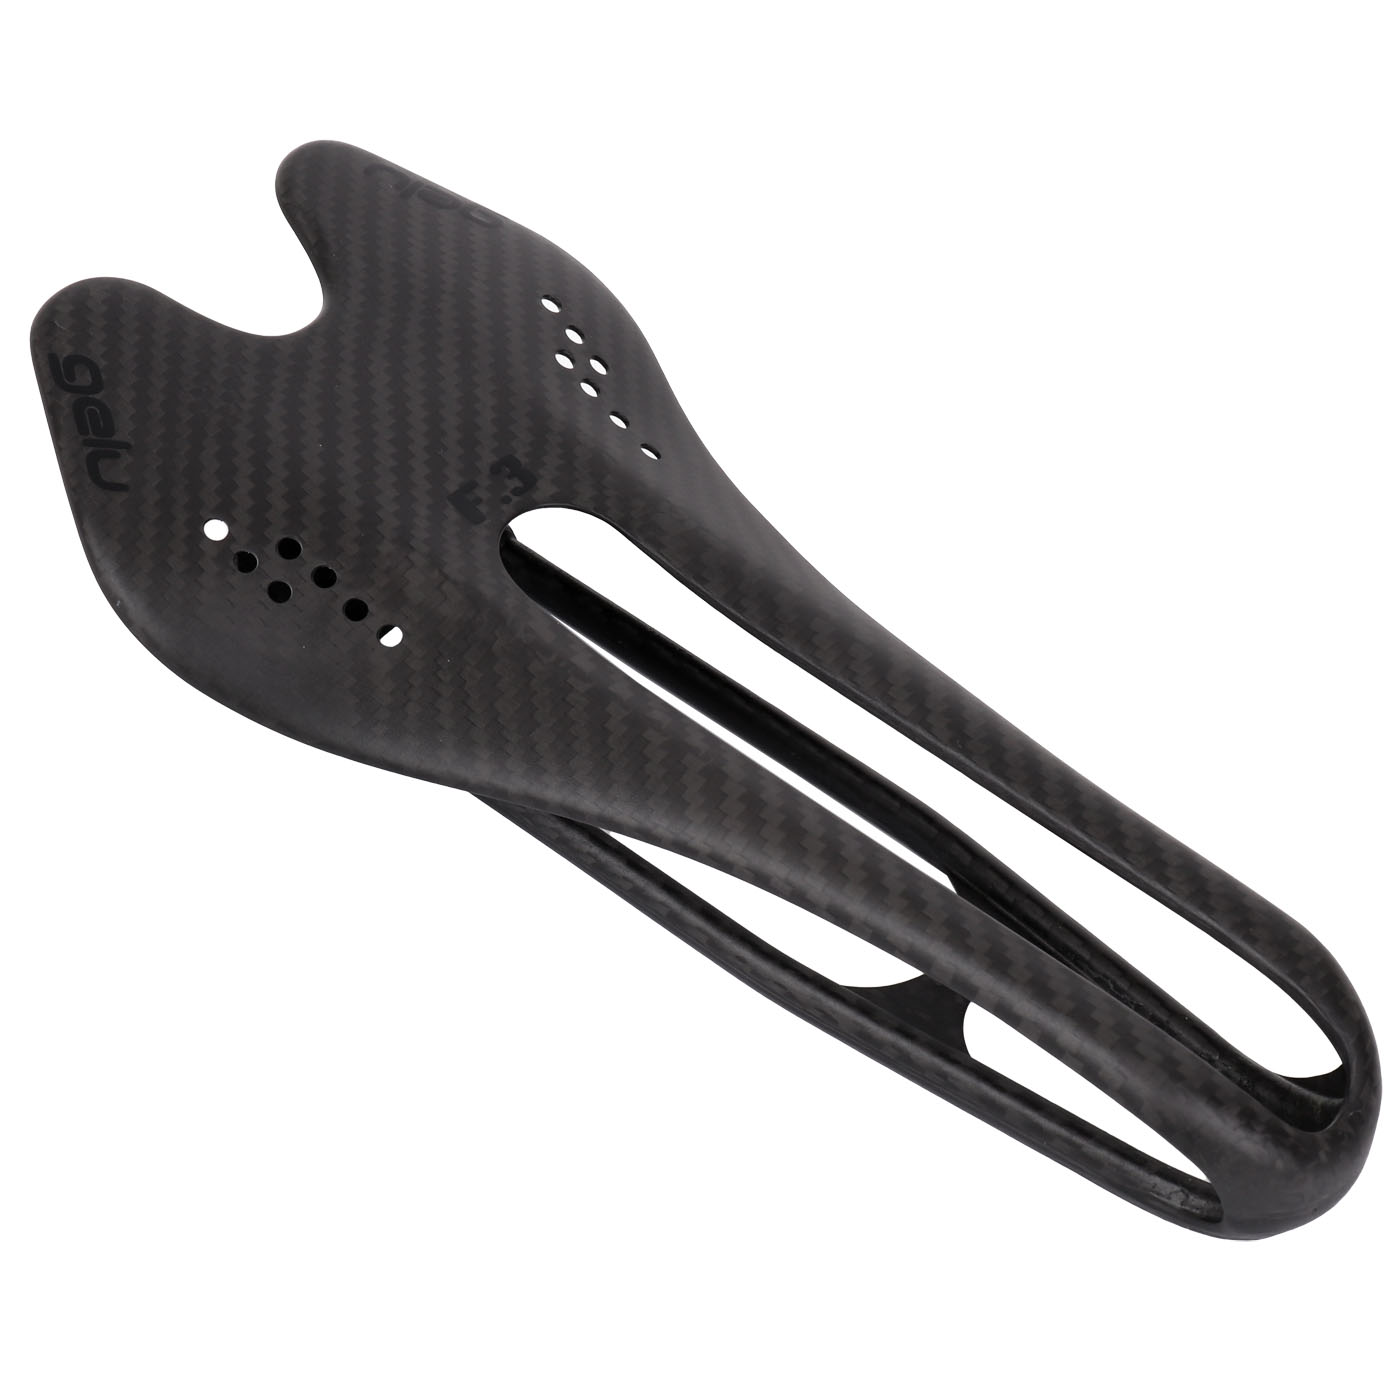 Productfoto van Gelu F3 Carbon Saddle with Punctured Top - black Logos